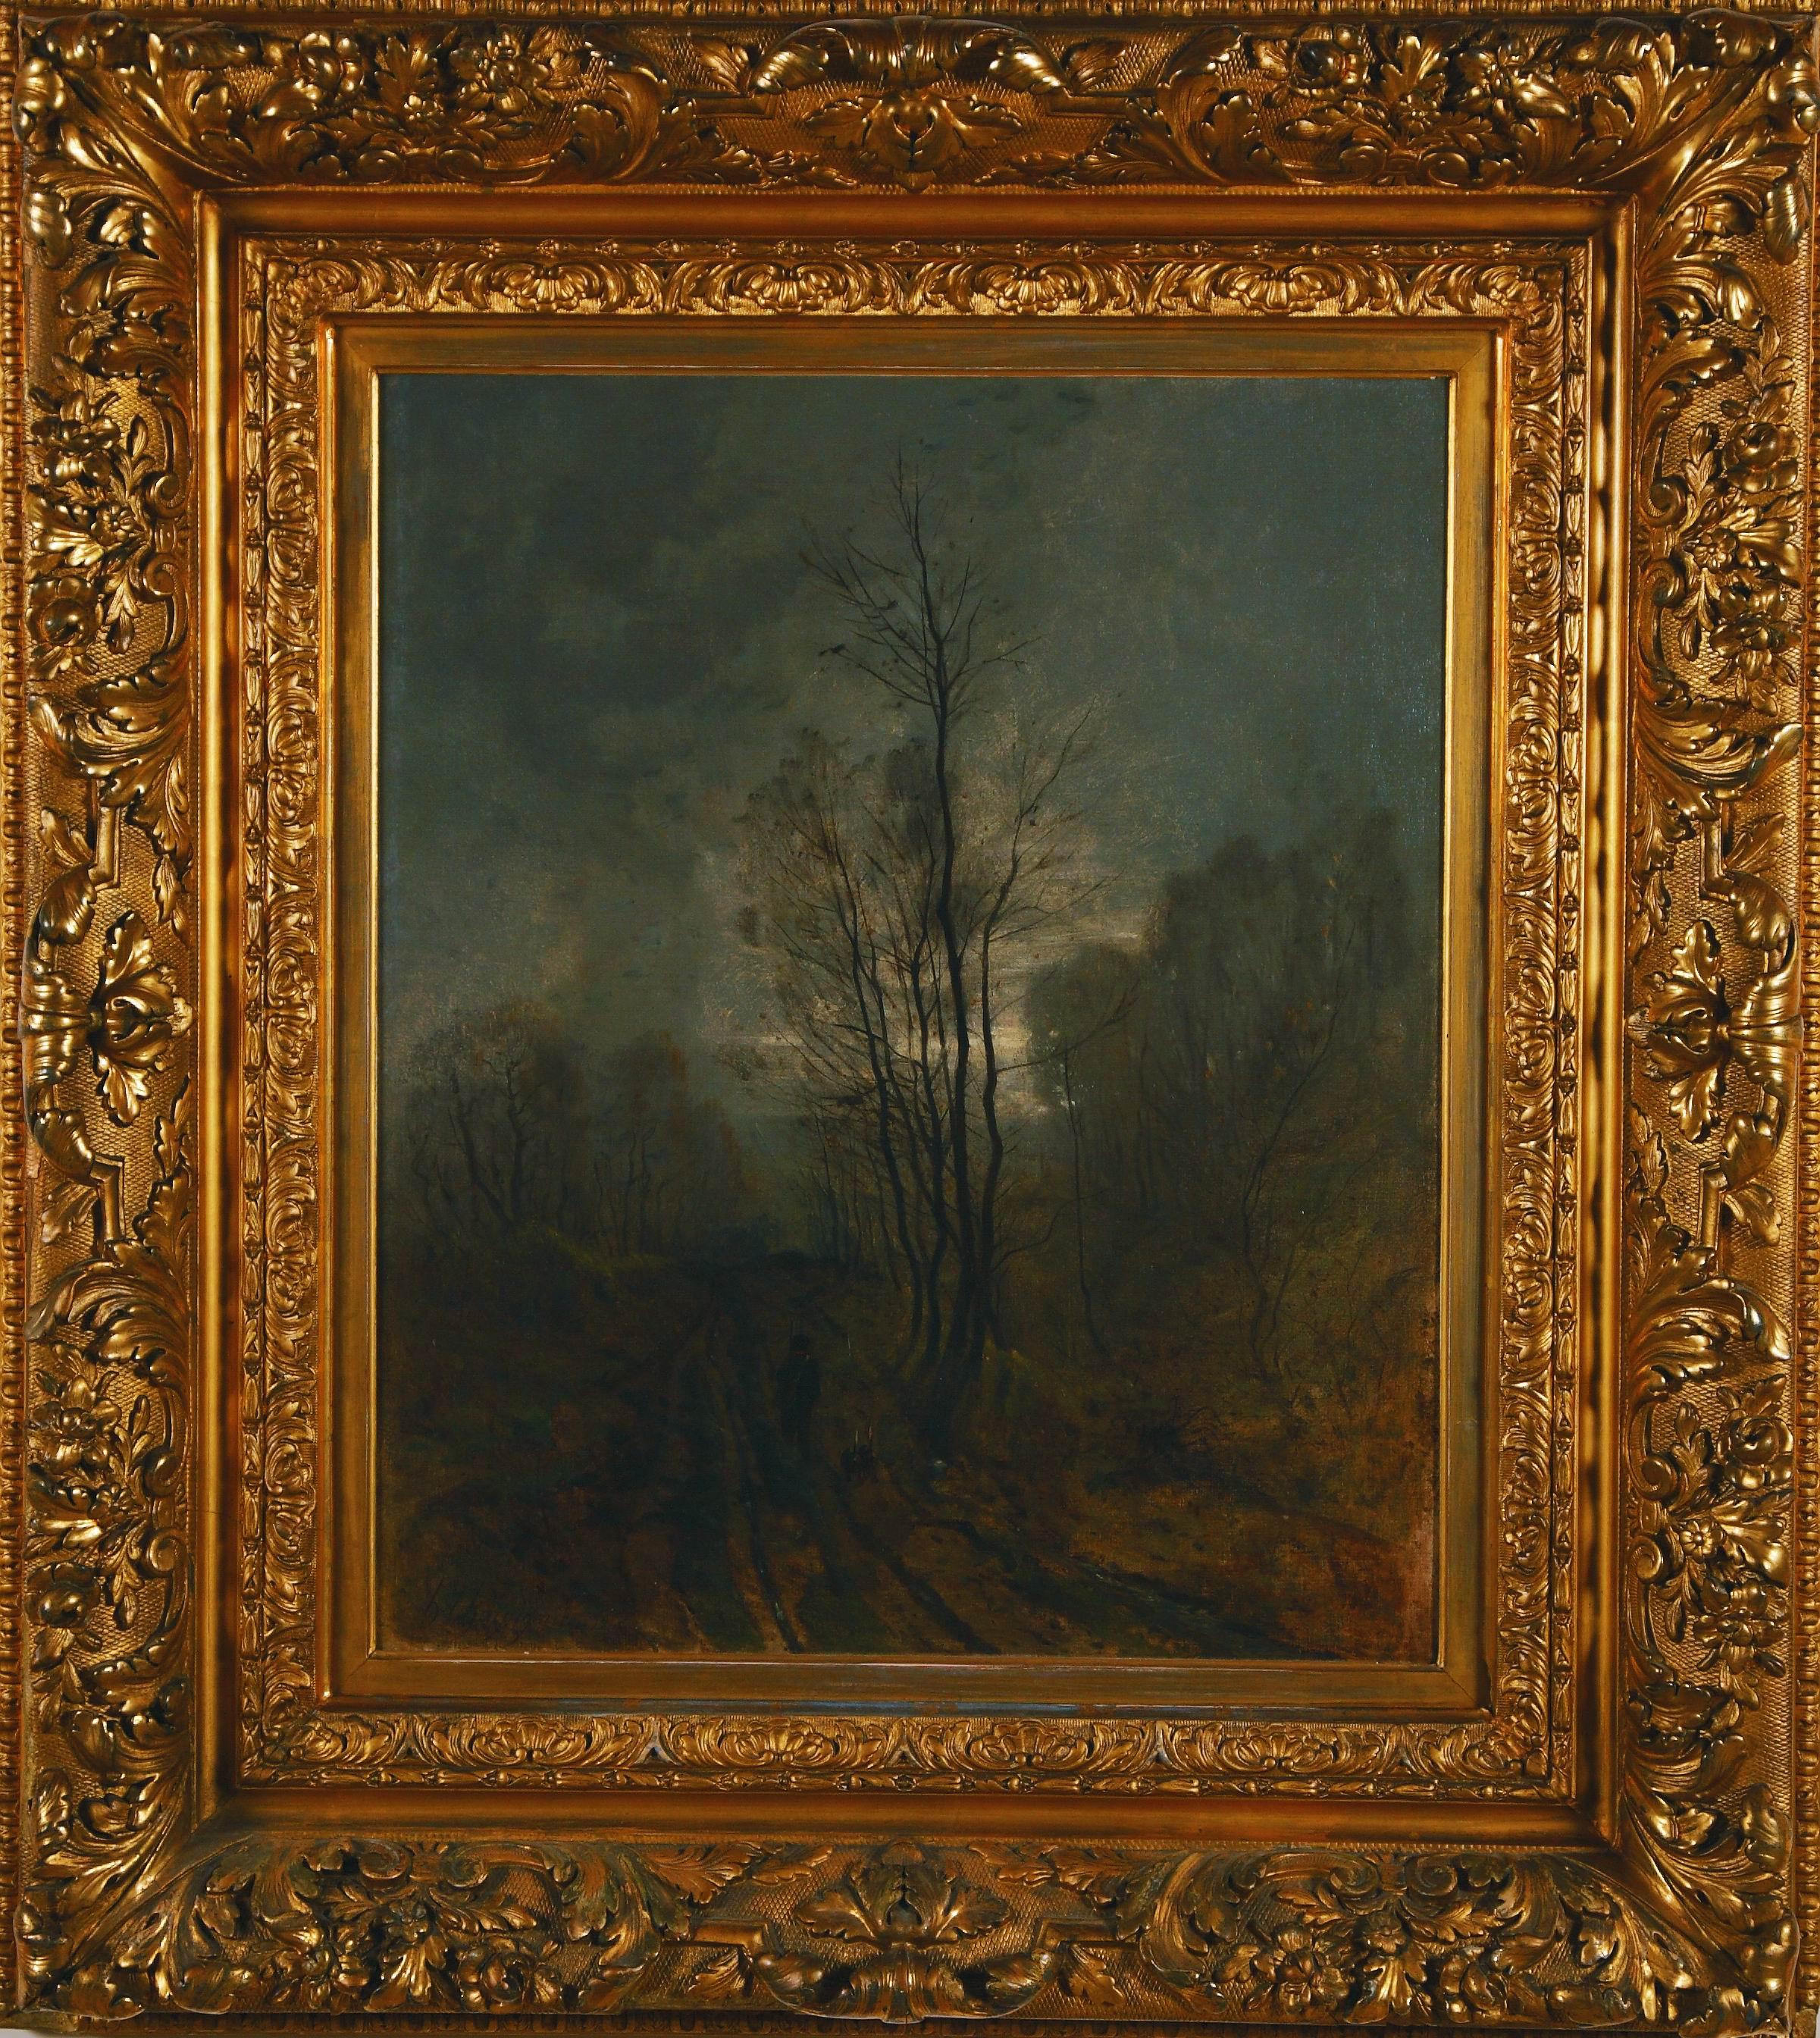 Henri Joseph Harpignies Landscape Painting - Original Harpignies oil painting "Landscape at Twilight